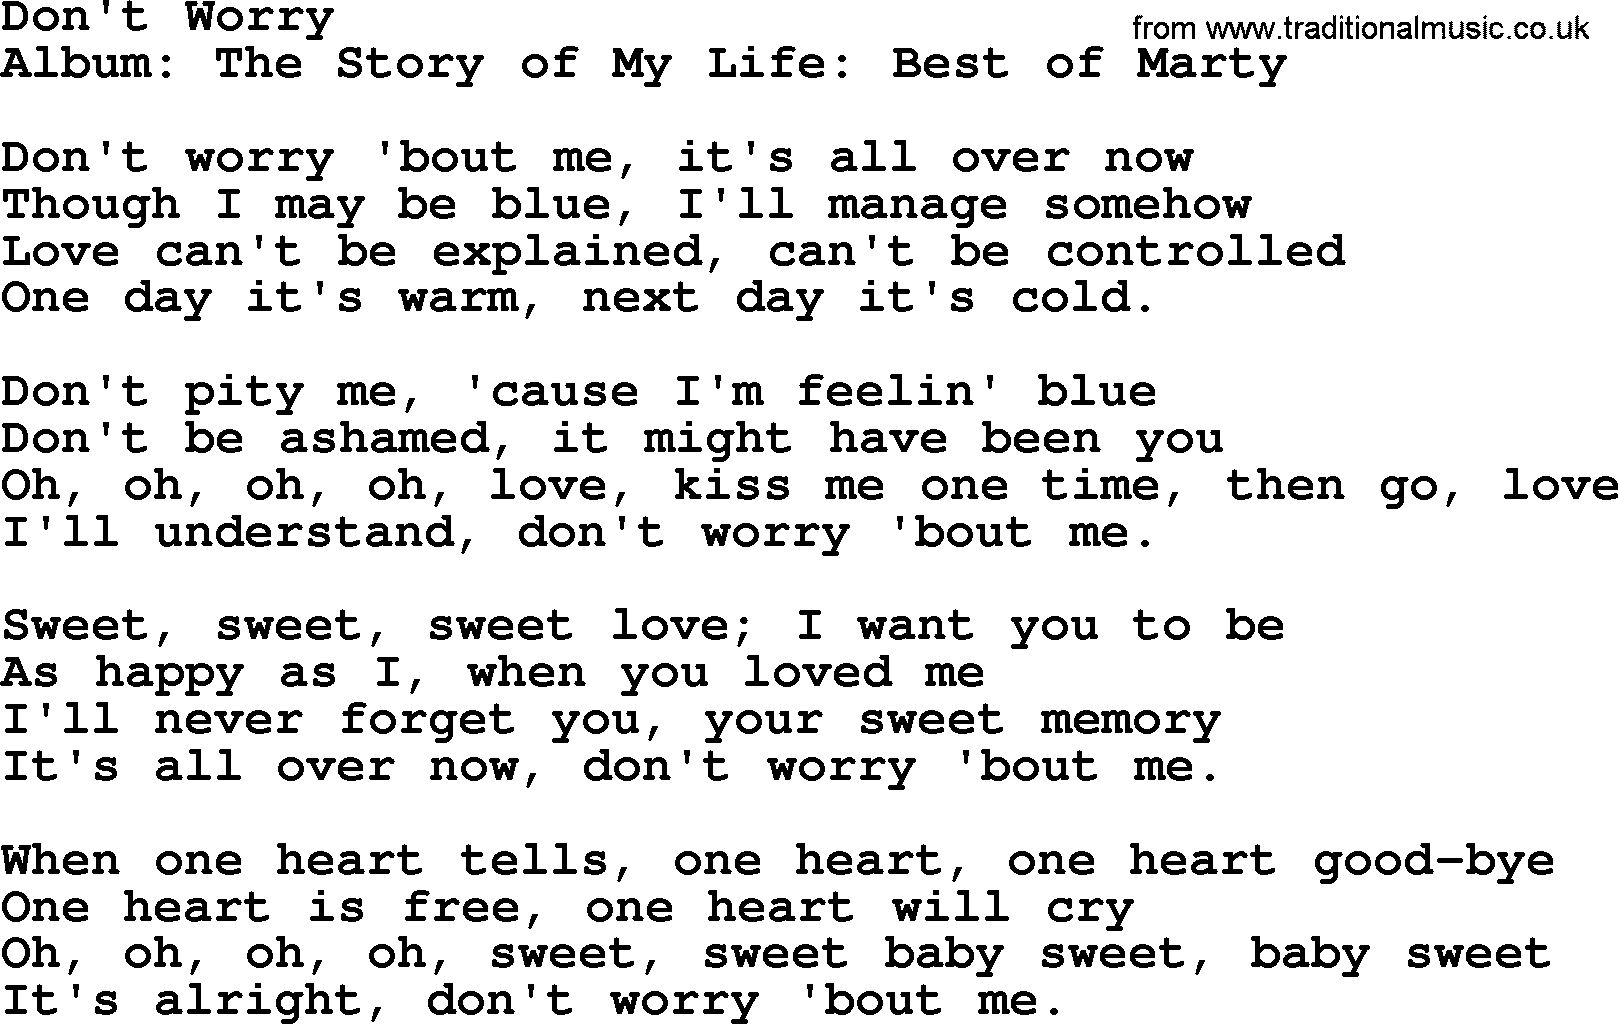 Marty Robbins song: Don't Worry, lyrics